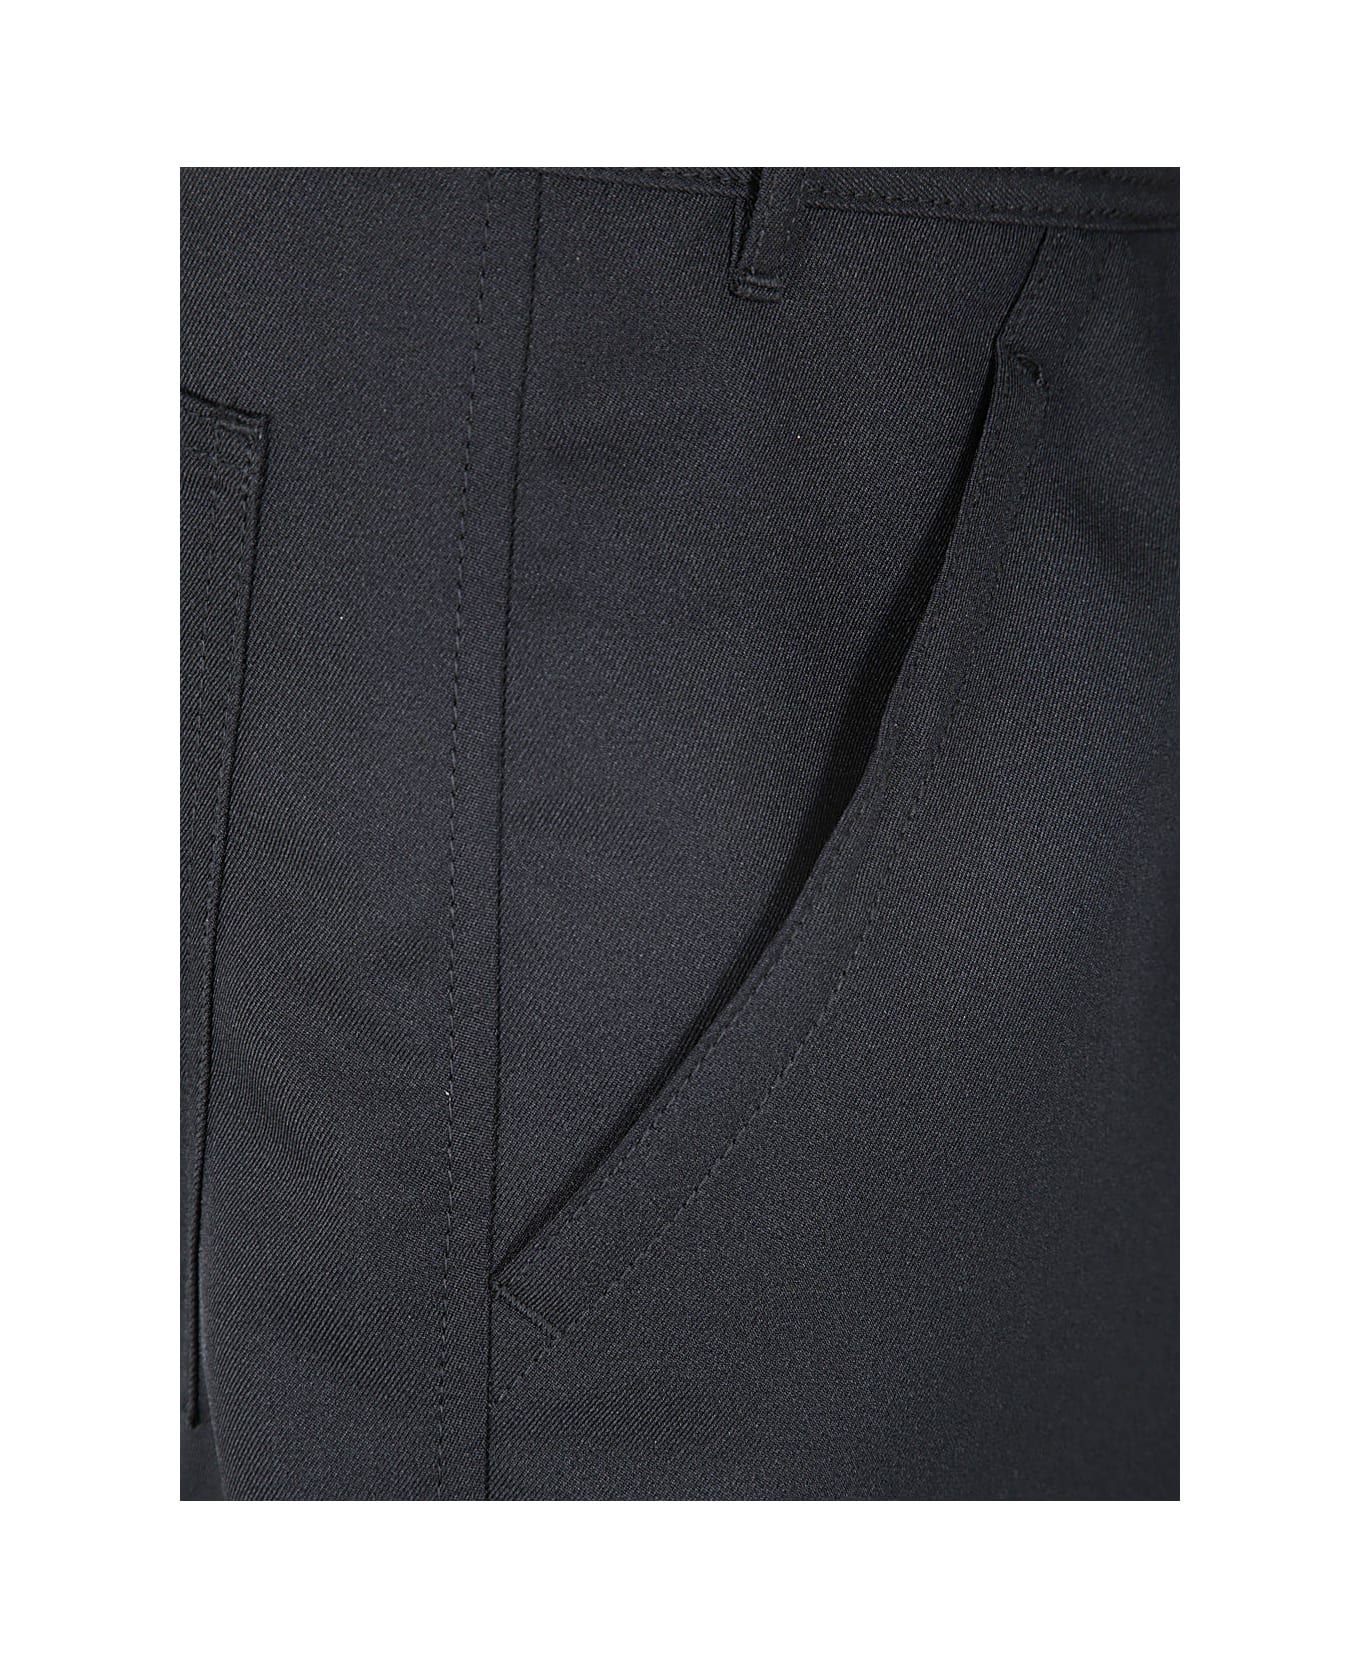 Comme des Garçons Shirt Mens Pants Woven - Black ショートパンツ